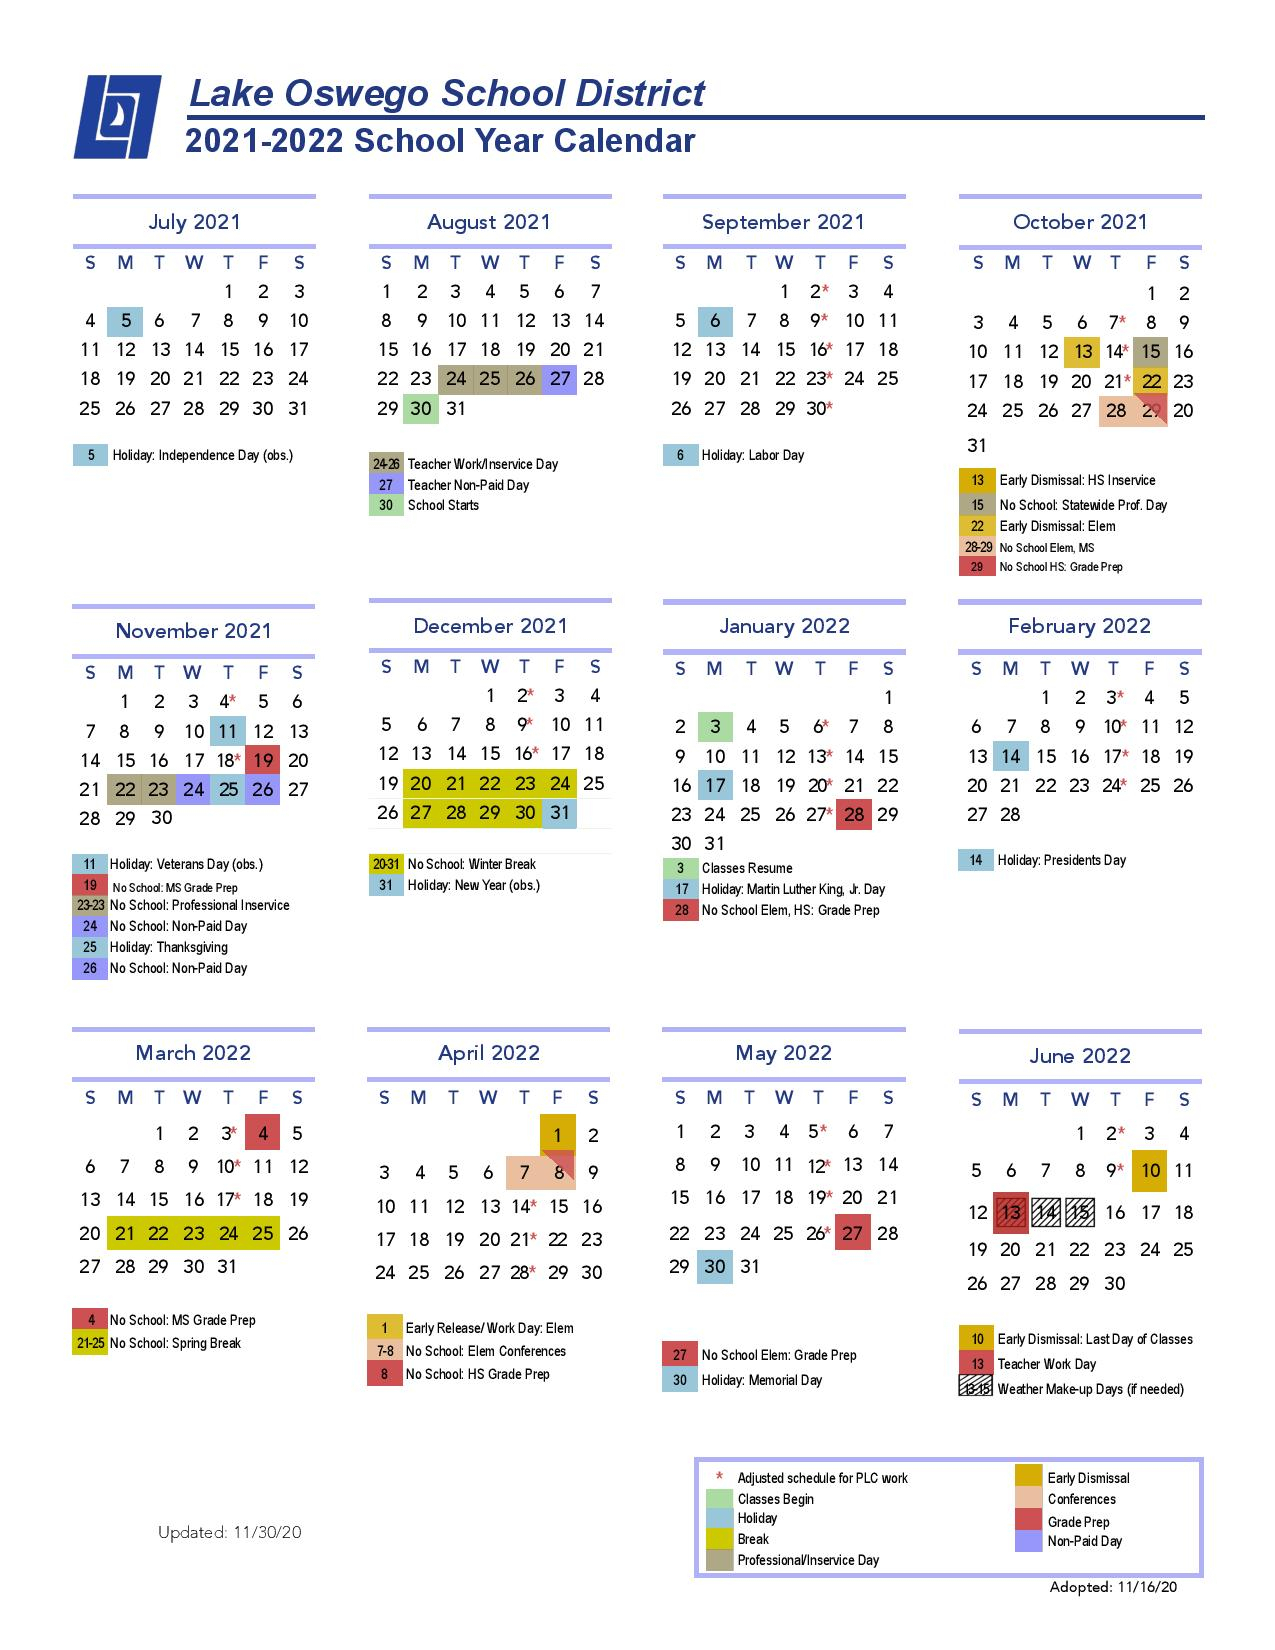 Lake Oswego School District Calendar 2021-2022 Pdf